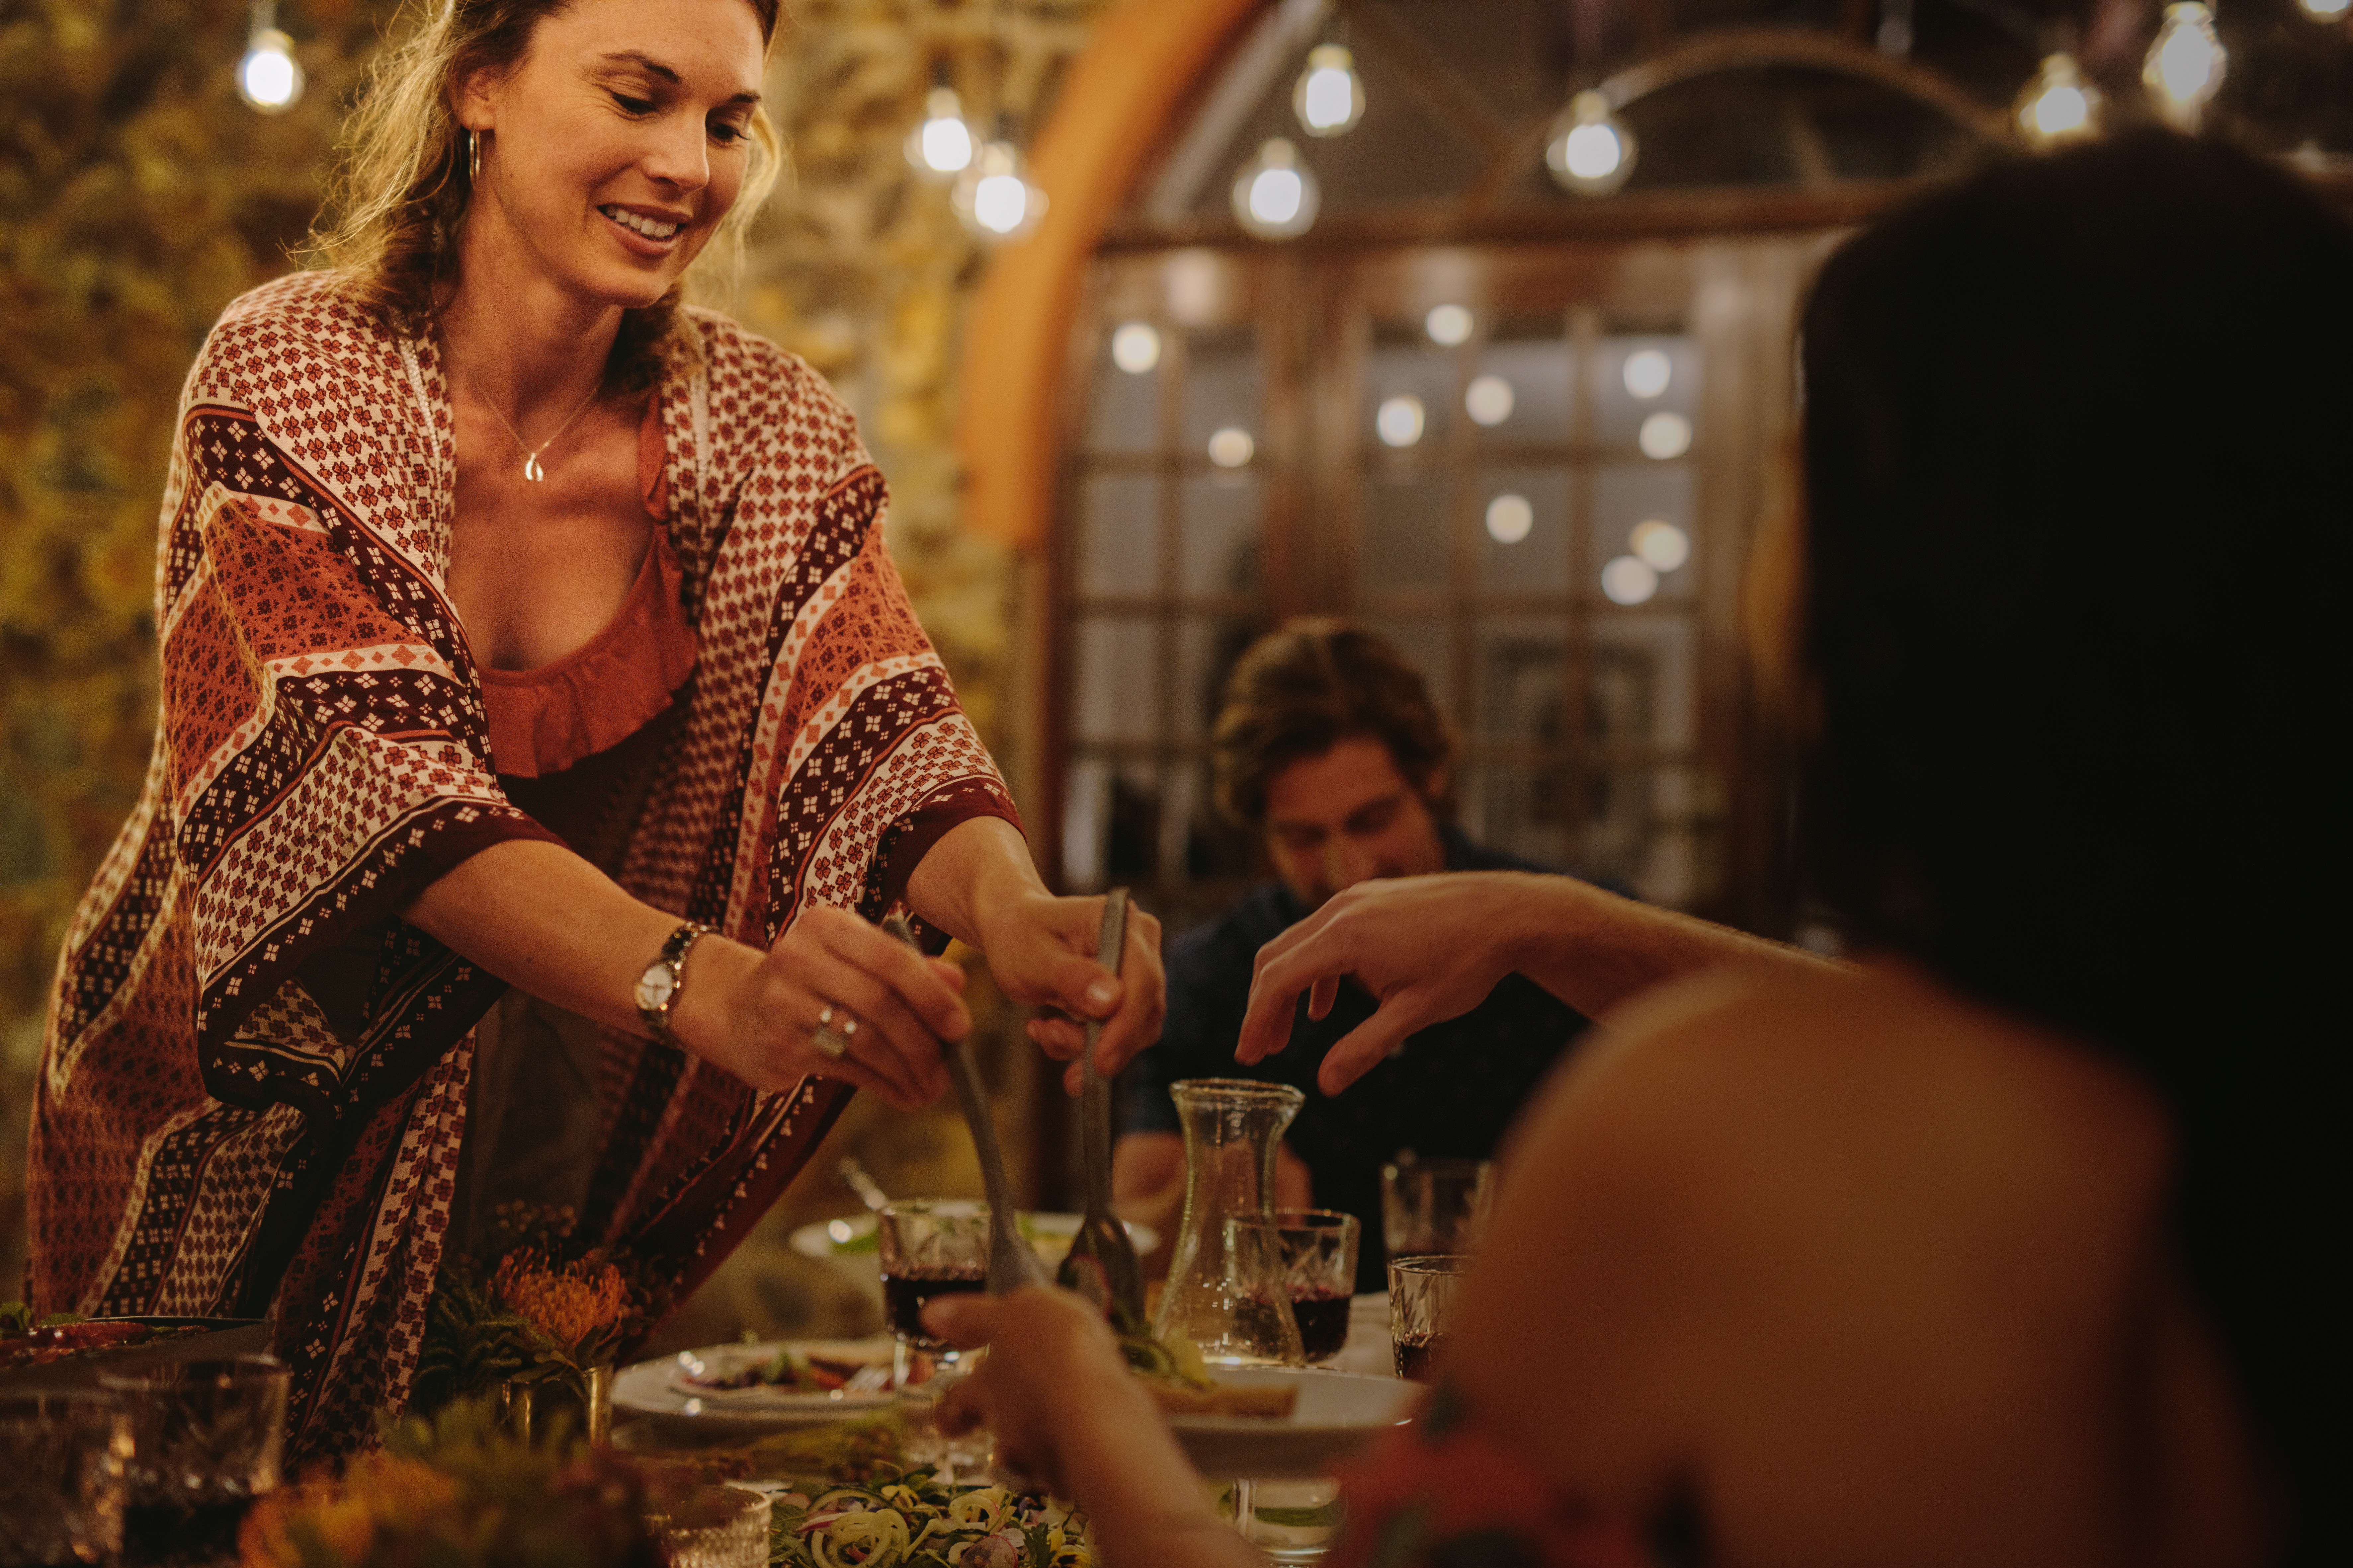 Tip For hosting a dinner party